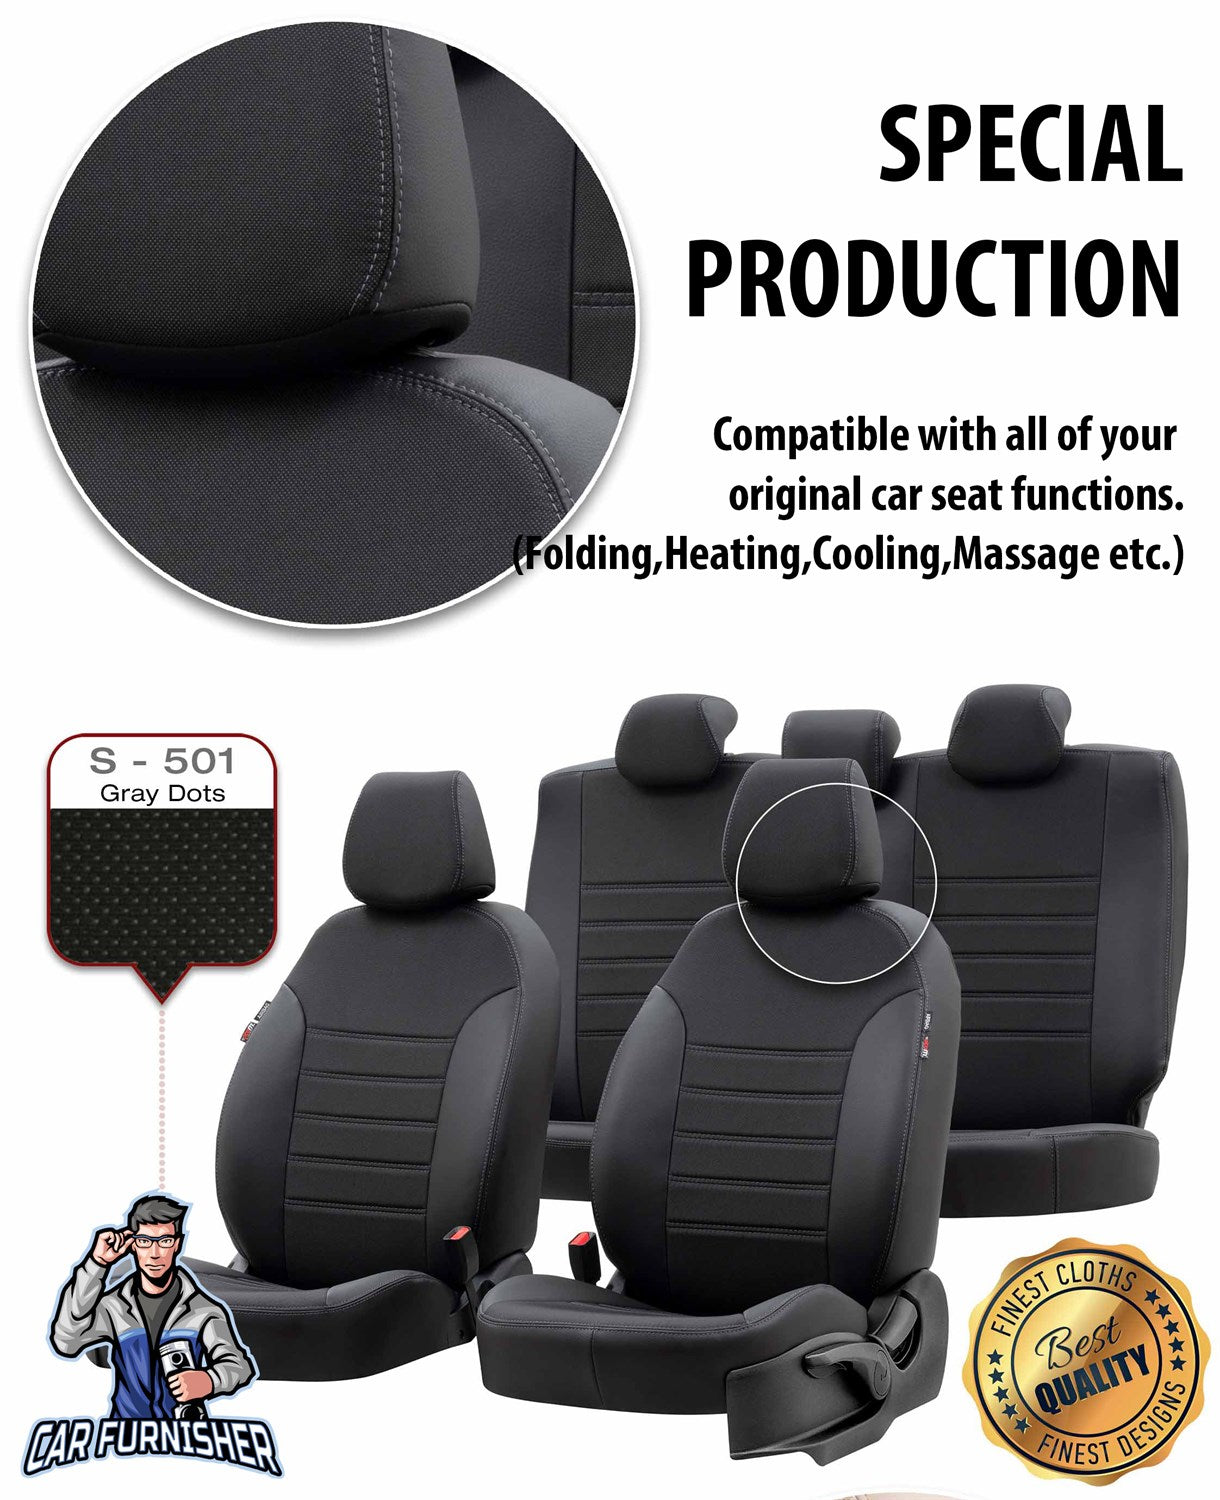 Man TGS Seat Cover Paris Leather & Jacquard Design Gray Front Seats (2 Seats + Handrest + Headrests) Leather & Jacquard Fabric